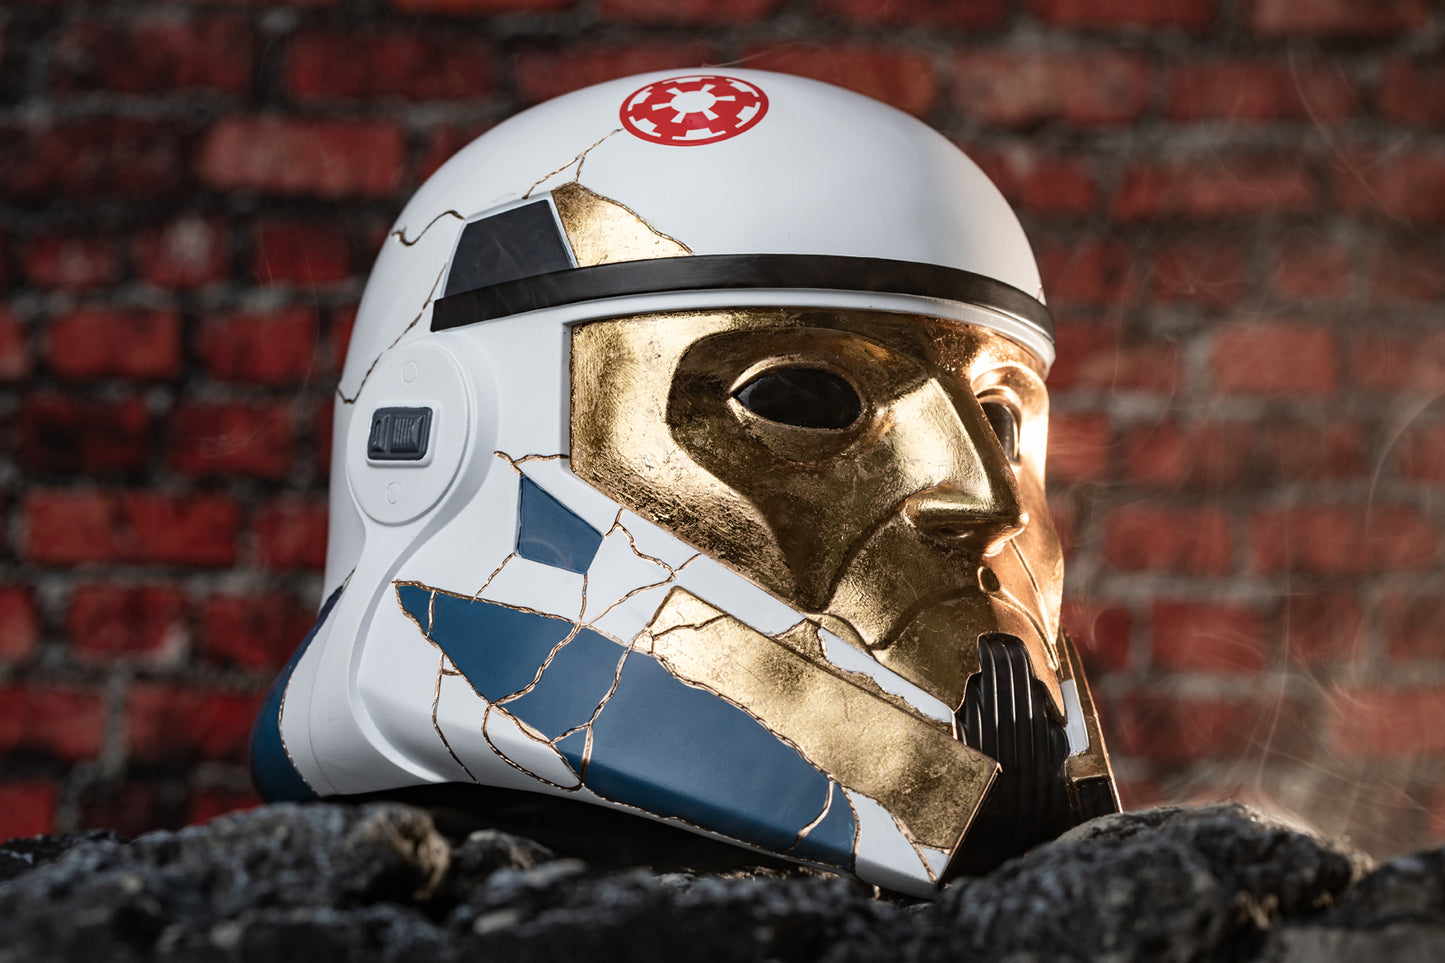 【Neu eingetroffen】Xcoser 1:1 Star Wars Ahsoka Captain Enoch Helmet Cosplay Props Resin Replicas